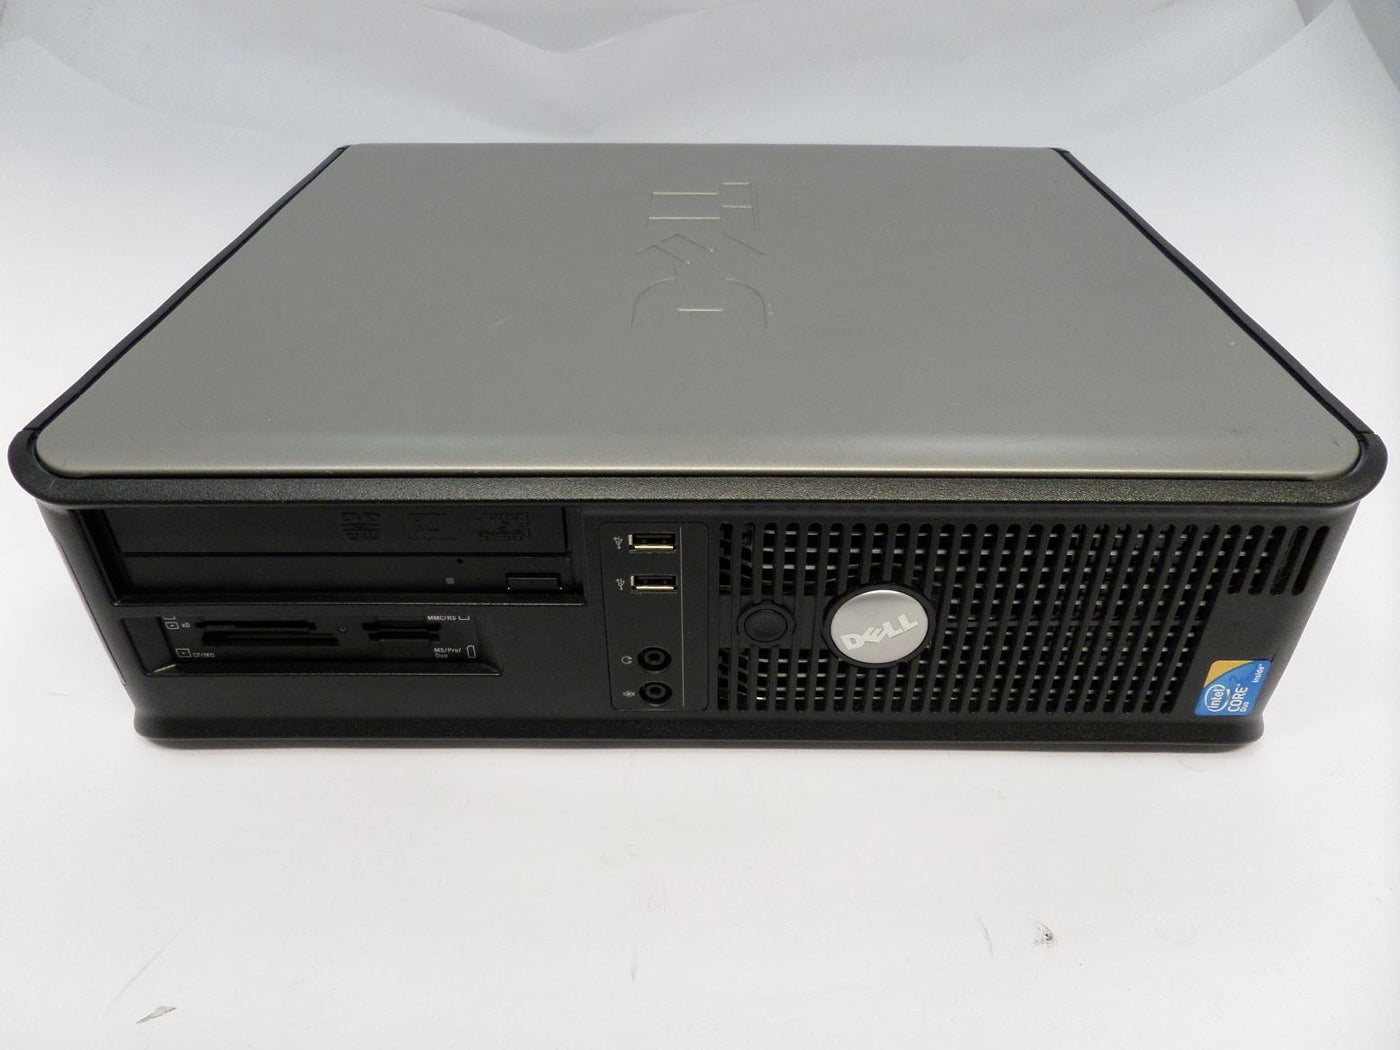 PR24701_Optiplex 780_Dell Optiplex 780 Core 2 Duo 2.93GHz Desktop PC - Image3